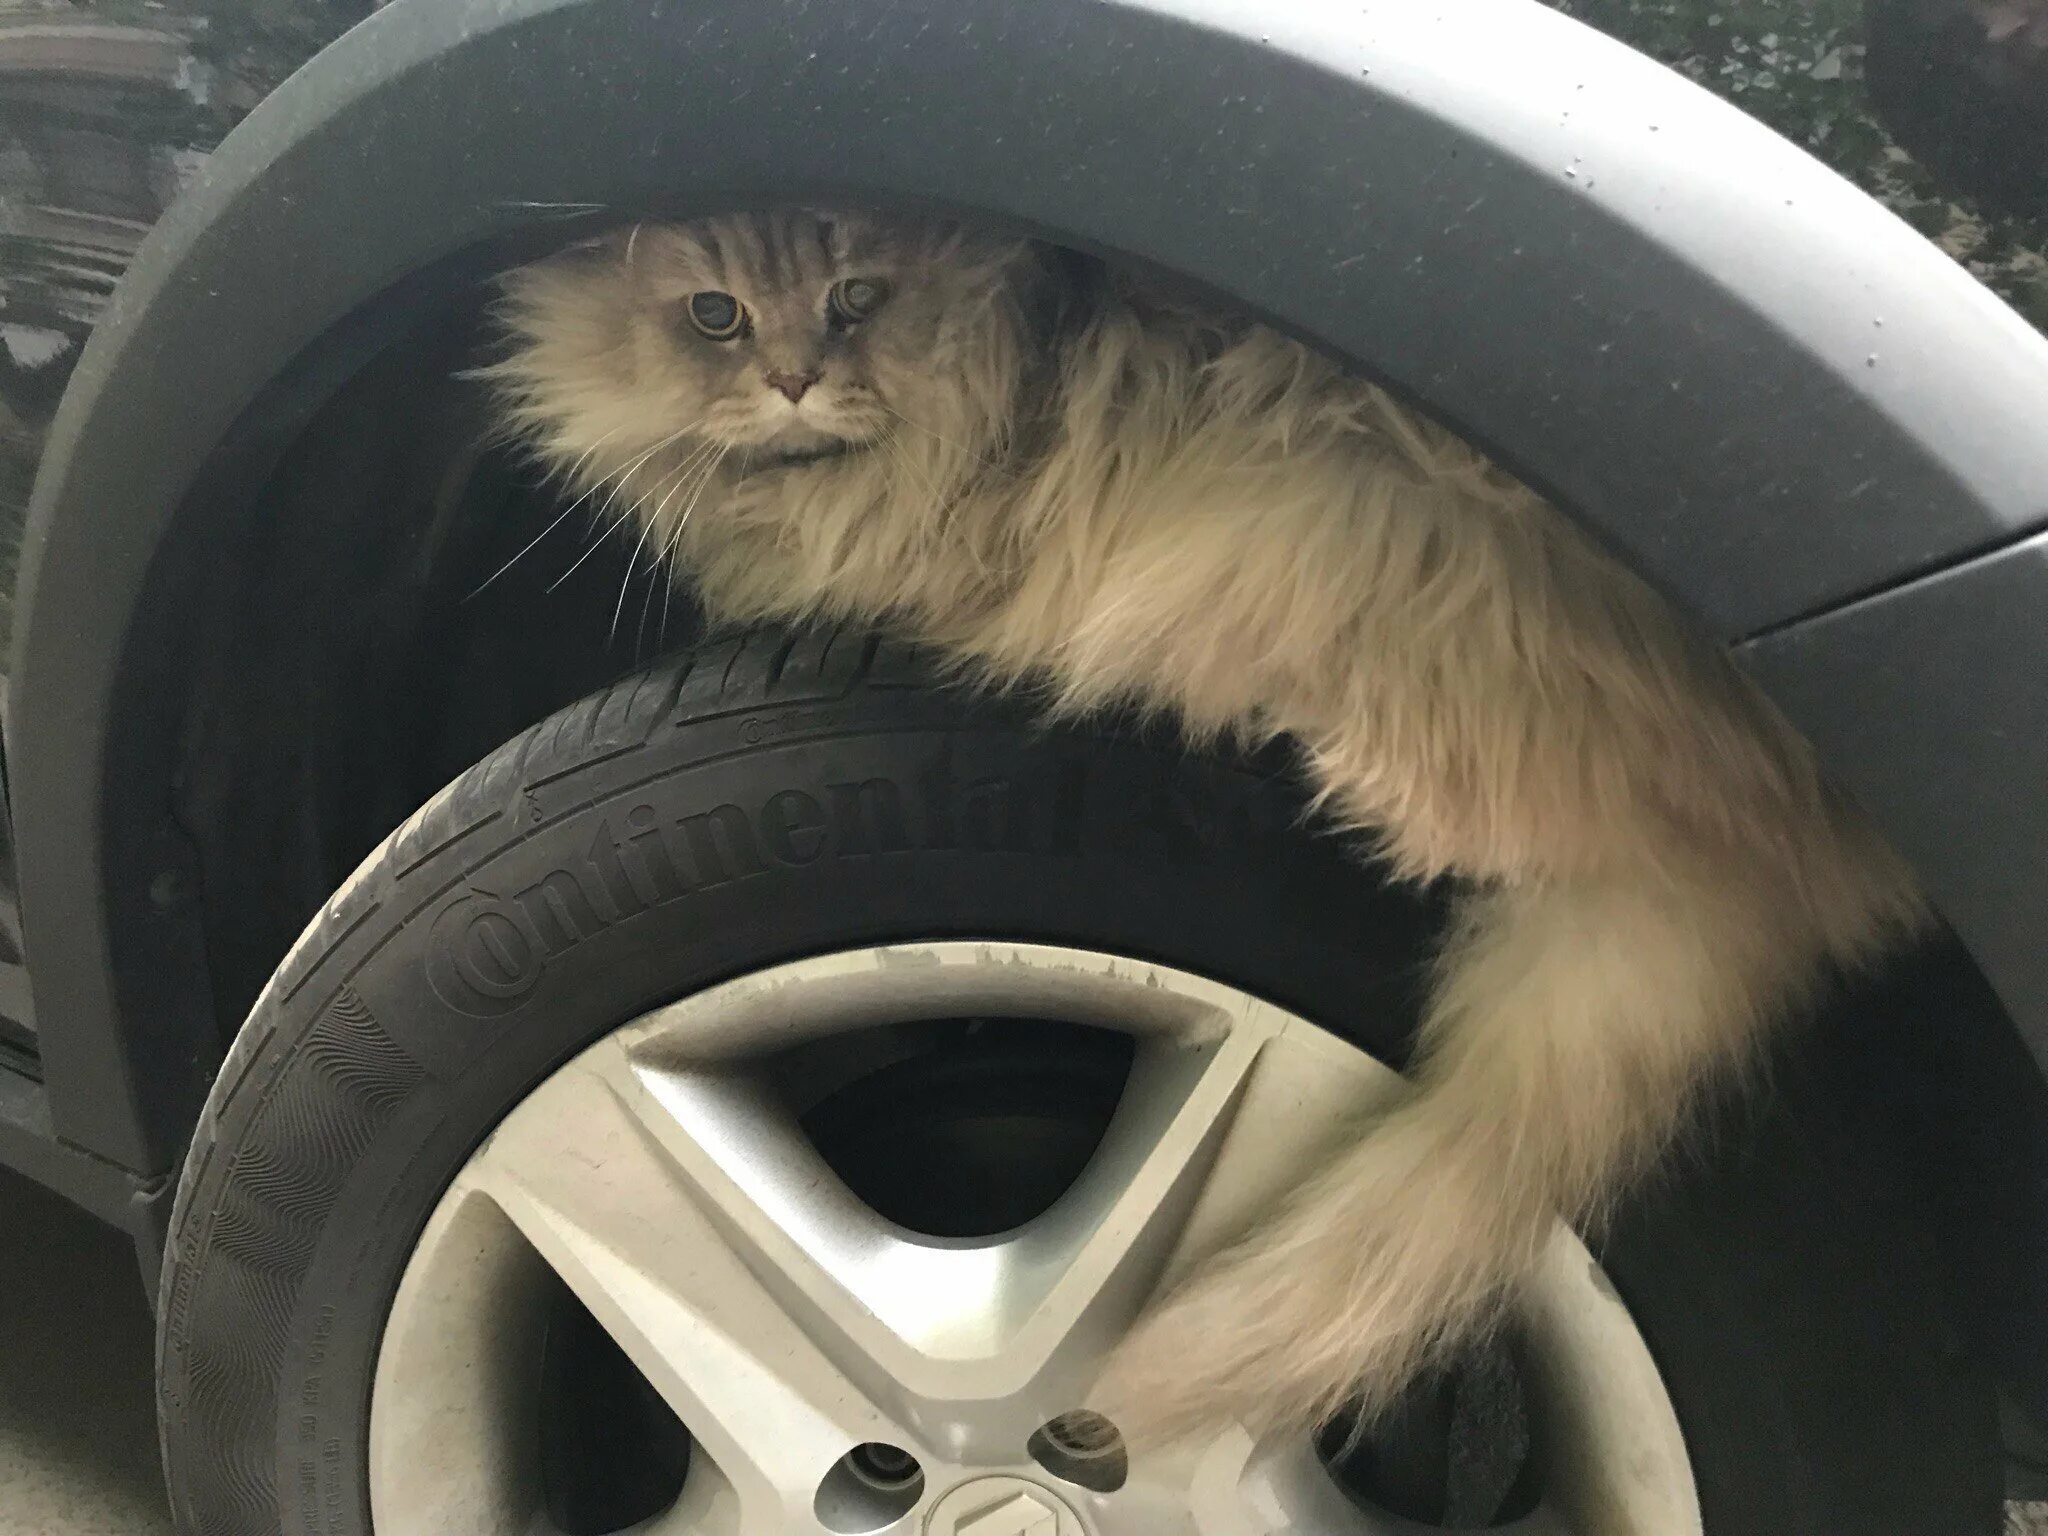 Включи котэ машина. Кот на колесе машины. Кот под колесом. Кот под колесом машины. Коты под колесами авто.